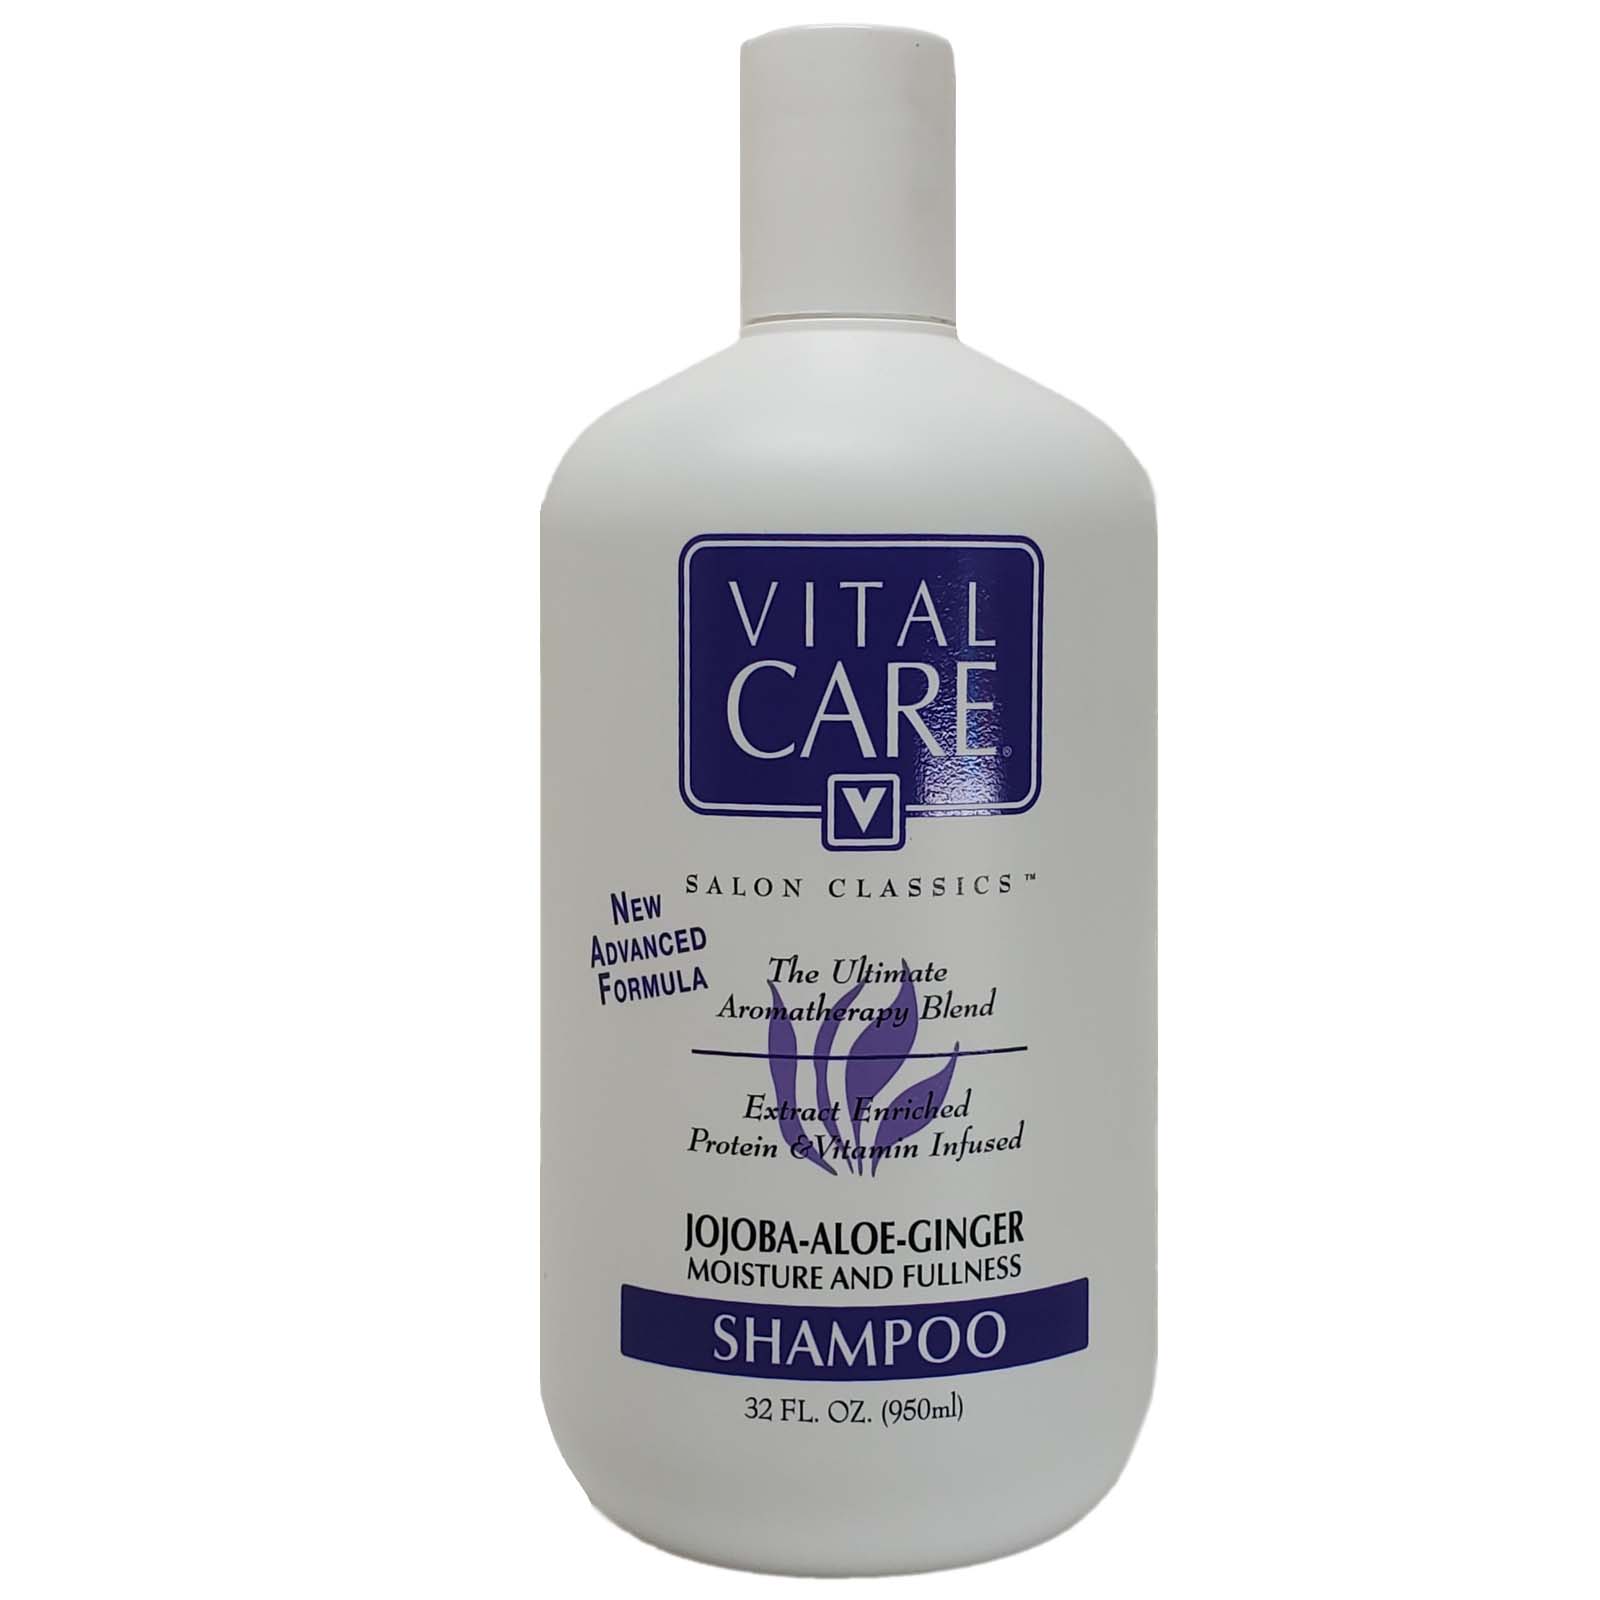 Vital Care Salon Classics Jojoba-Aloe-Ginger Shampoo - 32oz – Love Vital Care Care